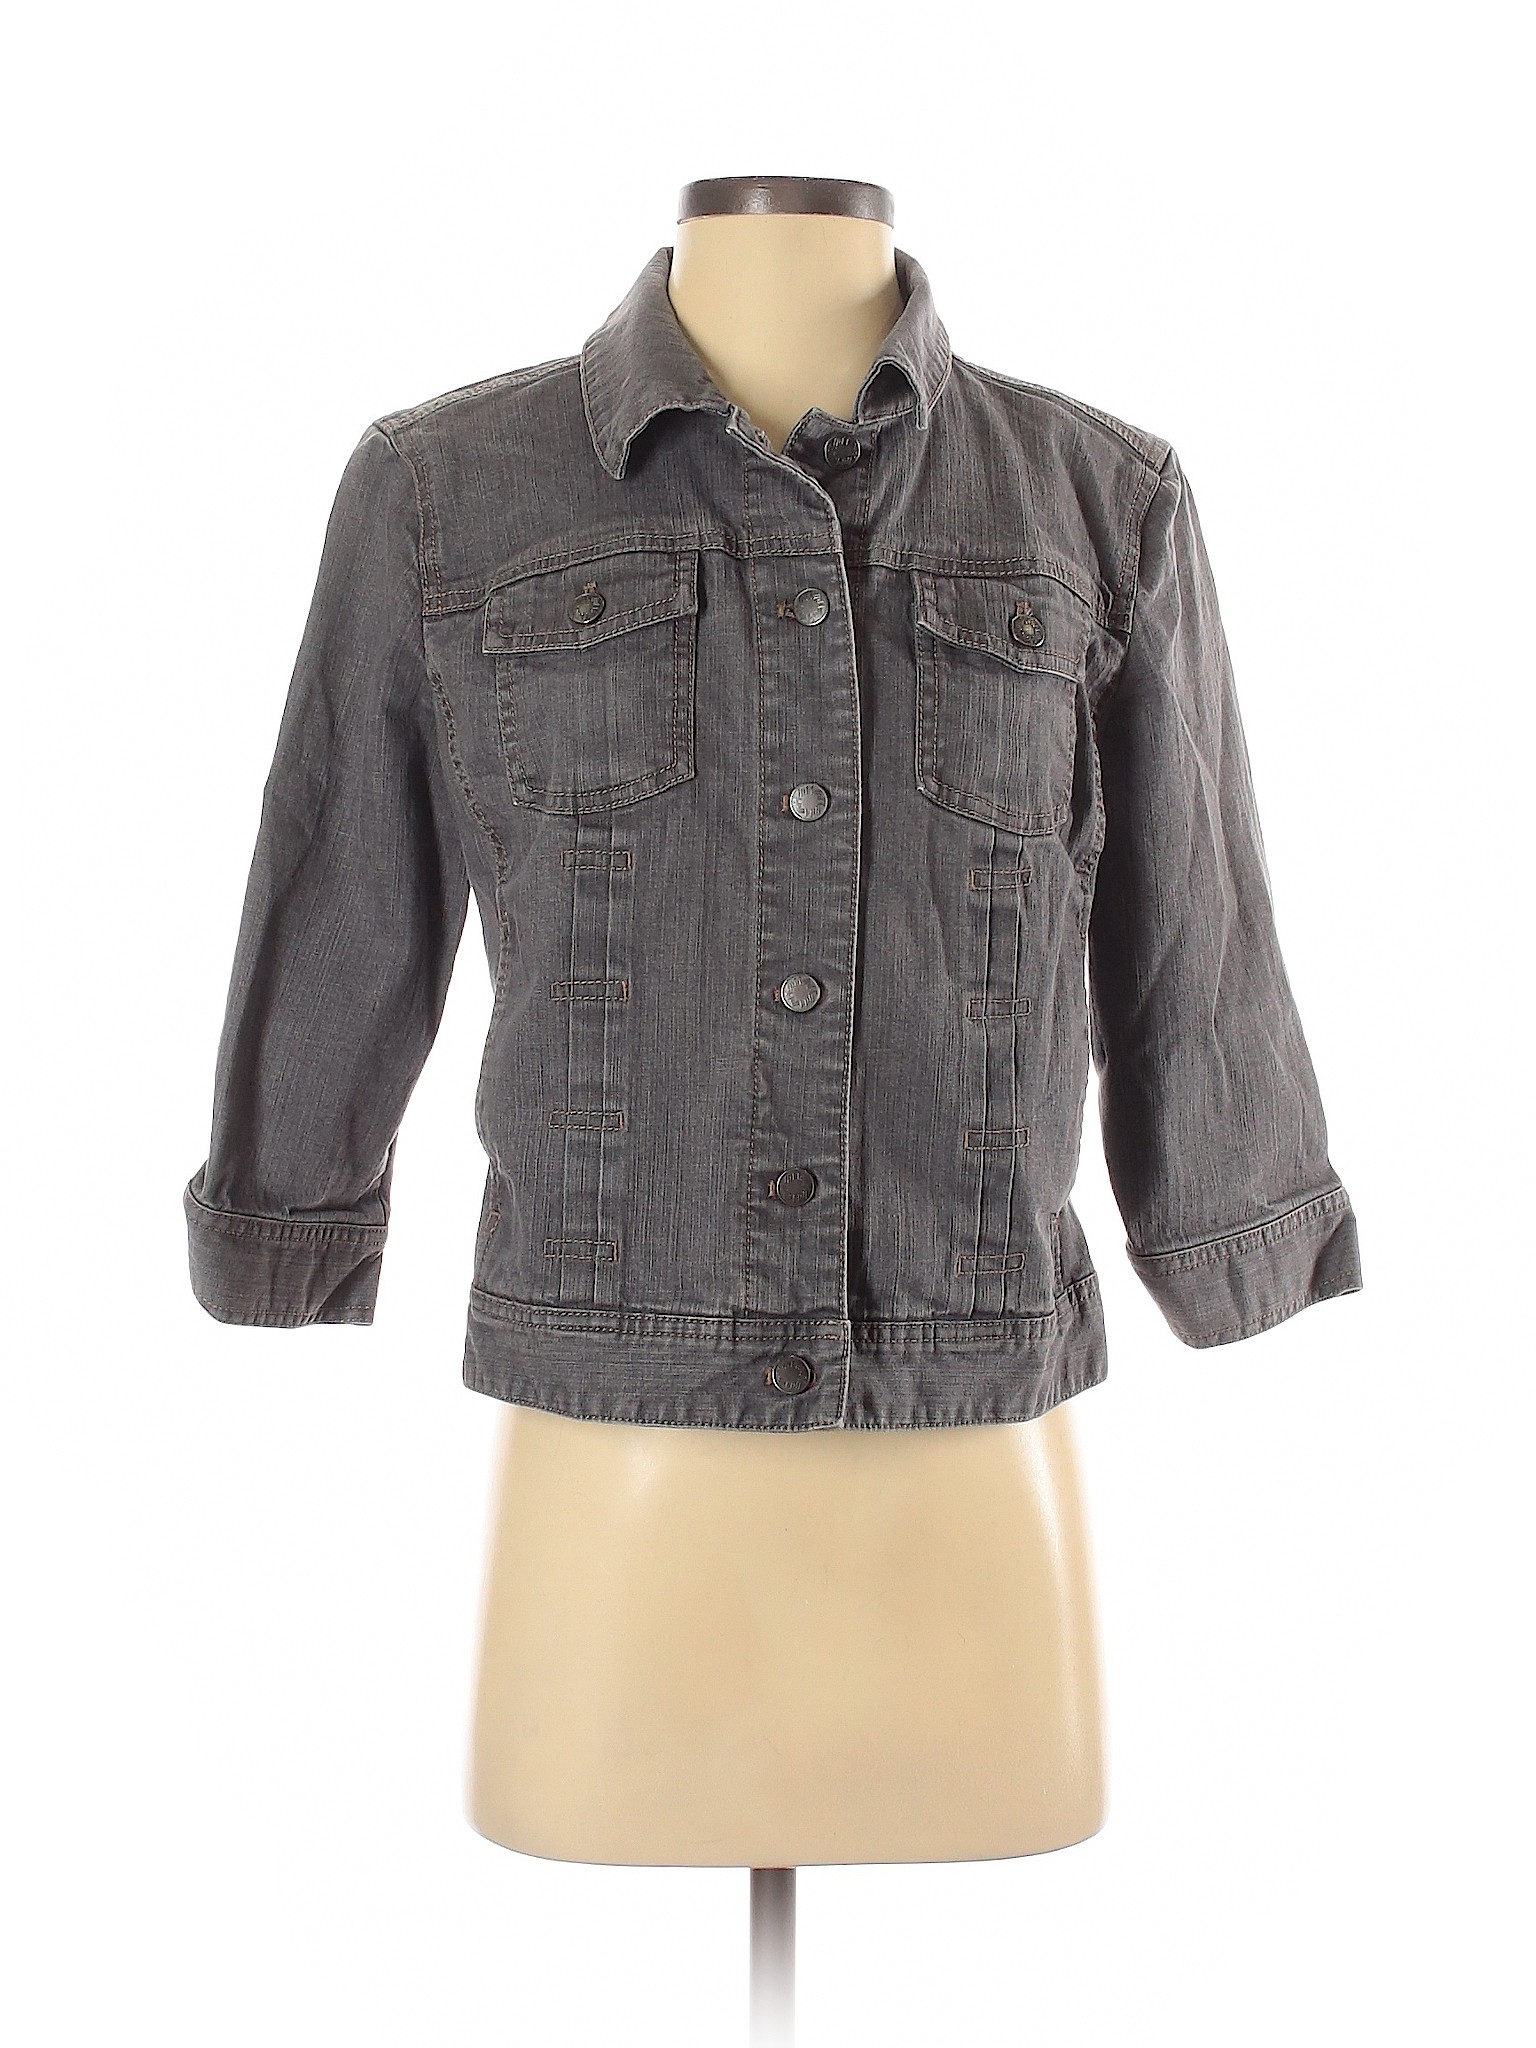 J.jill Women Gray Denim Jacket S Petites | eBay